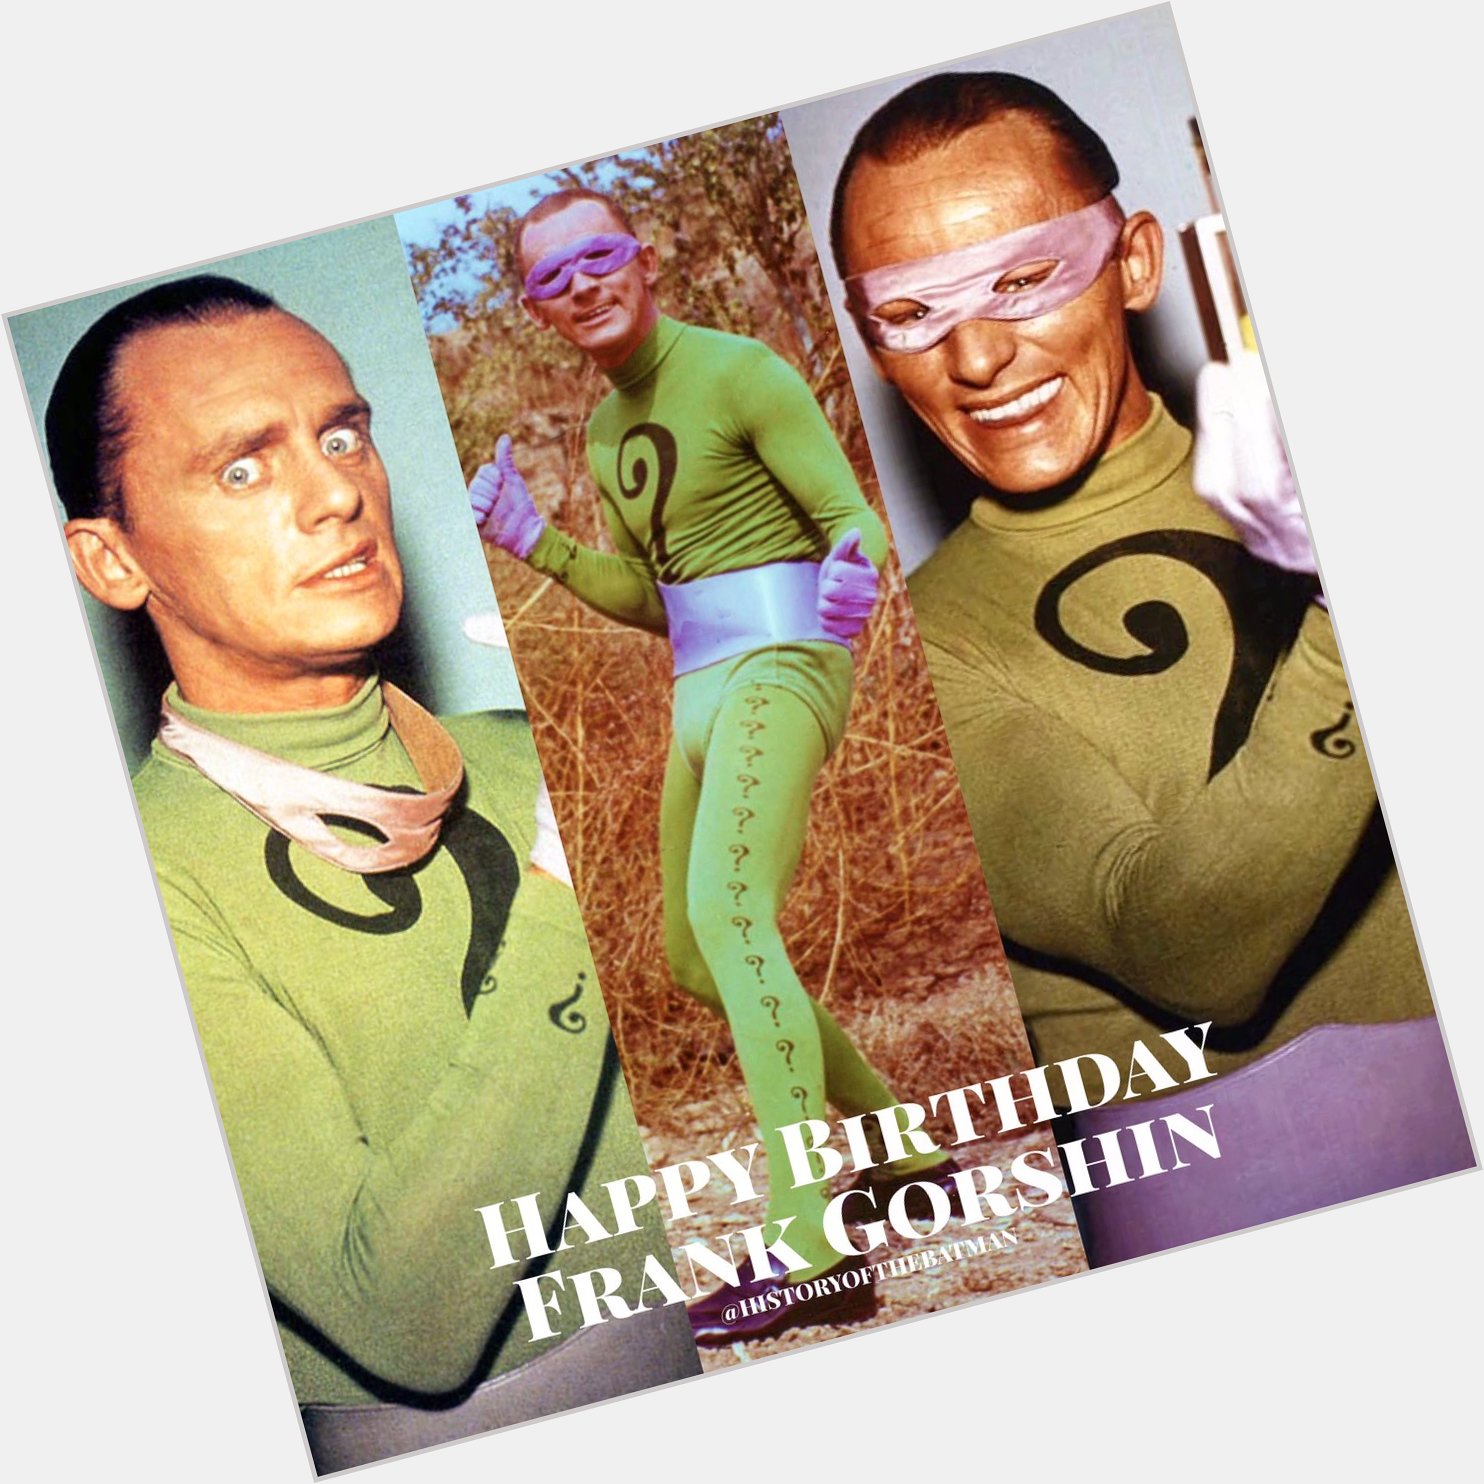 Wish Frank Gorshin, on 1966\s tv show, a happy birthday!   